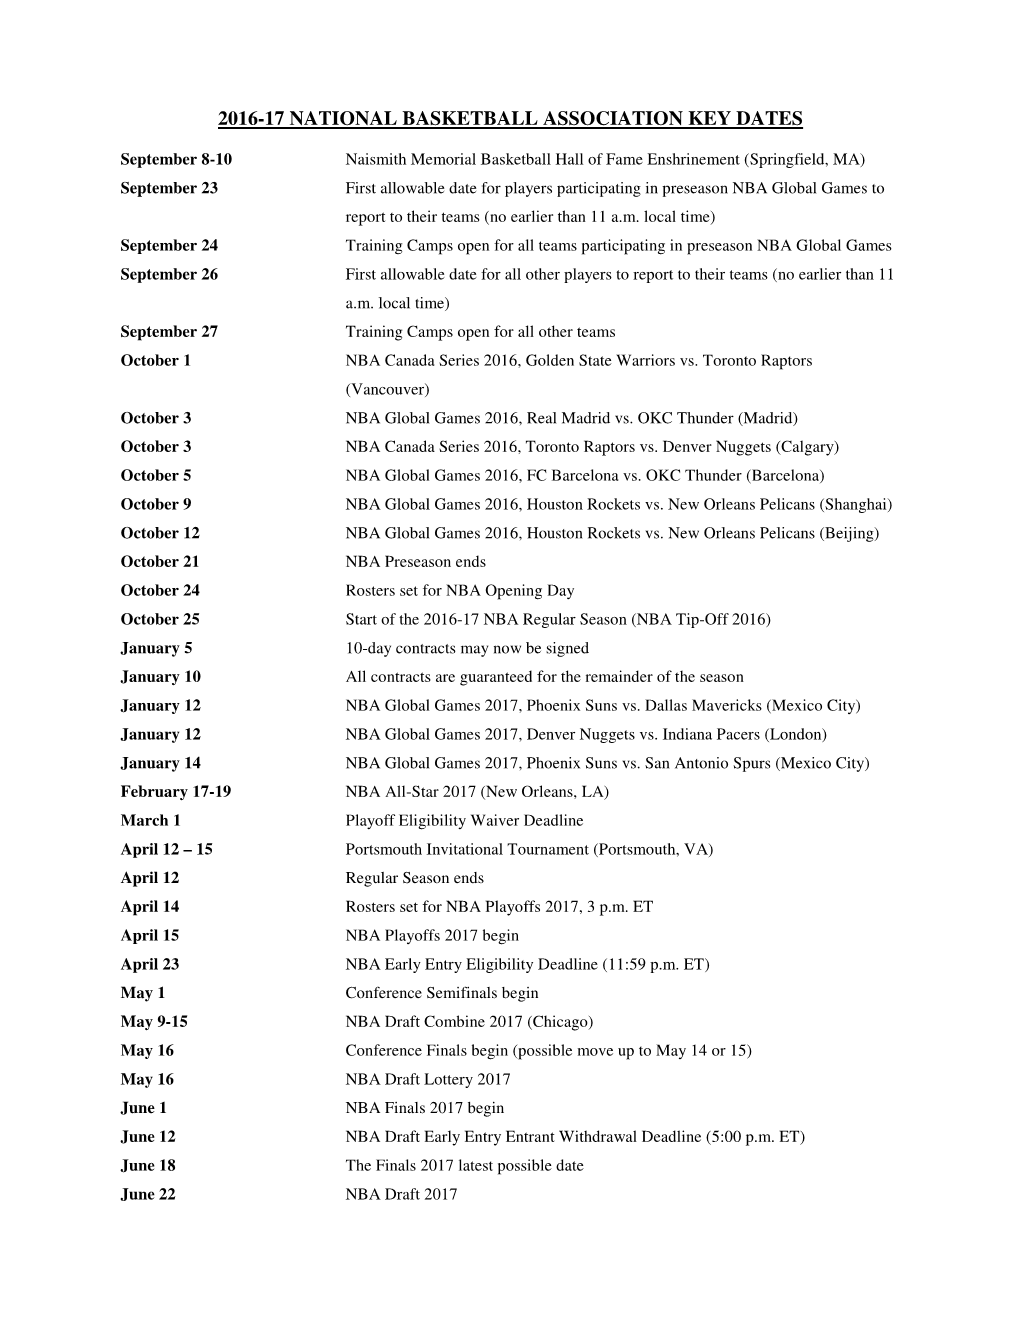 2016-17 National Basketball Association Key Dates